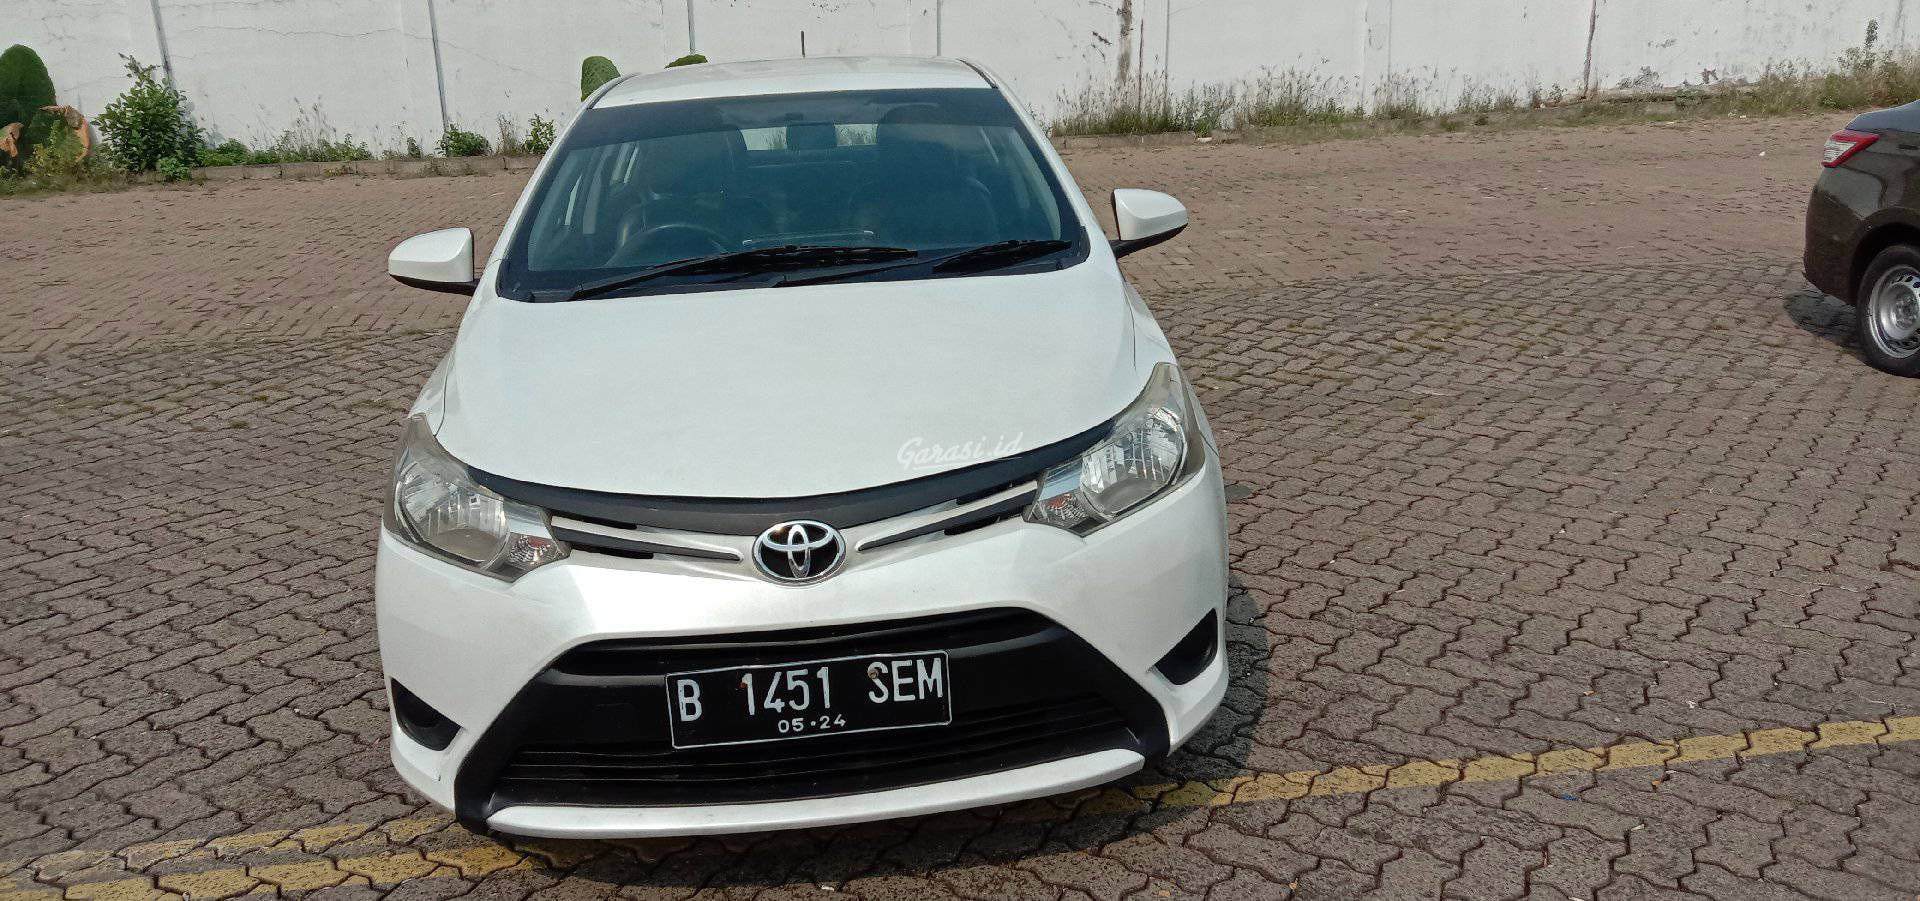 Jual Mobil Bekas 2013 Toyota Vios gen 3 Jakarta Barat 00tr303 - Garasi.id